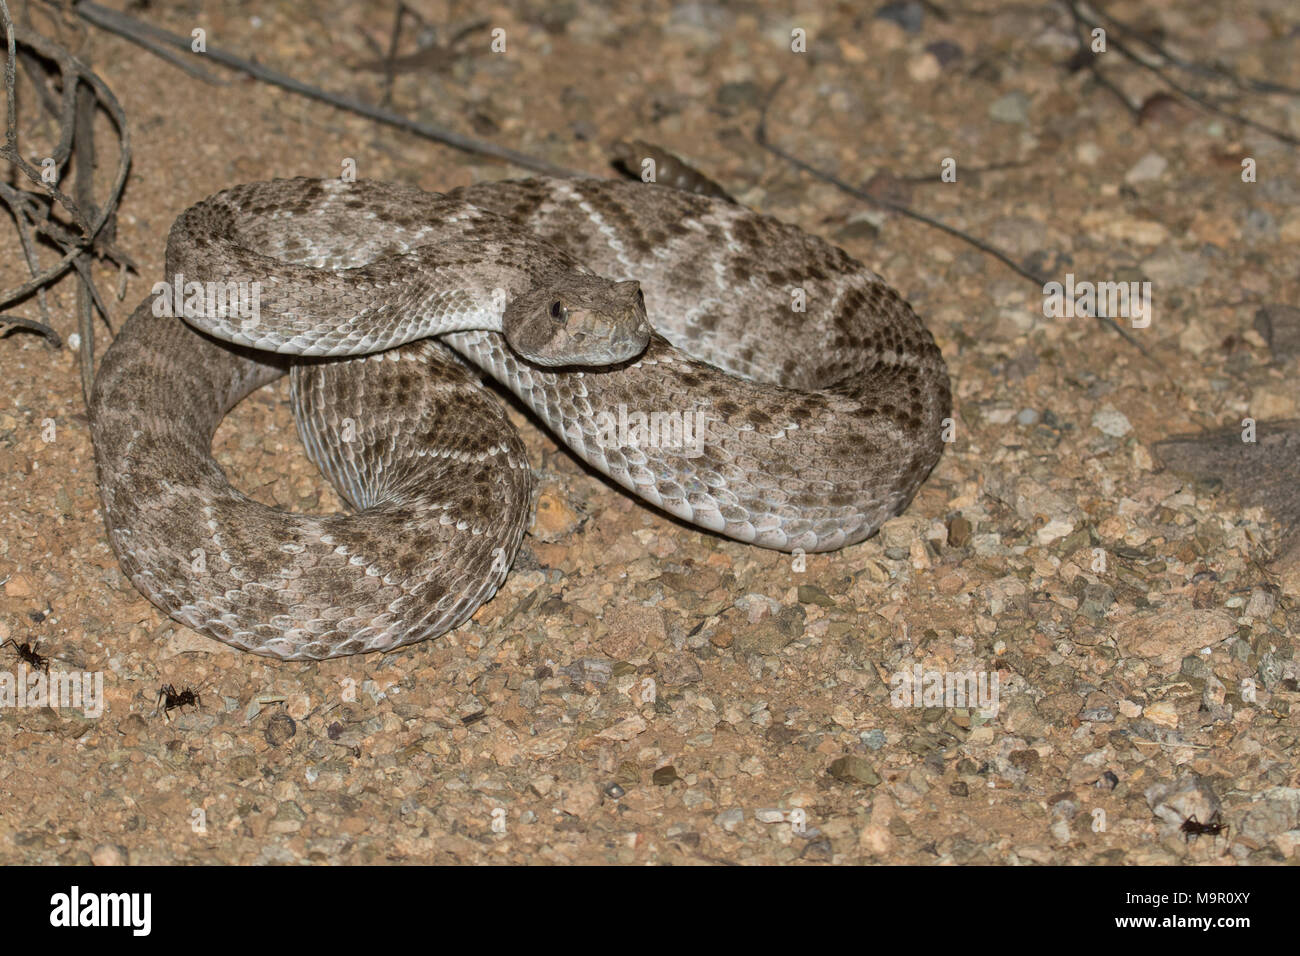 Western diamondback rattlesnake in defensive posture. Stock Photo